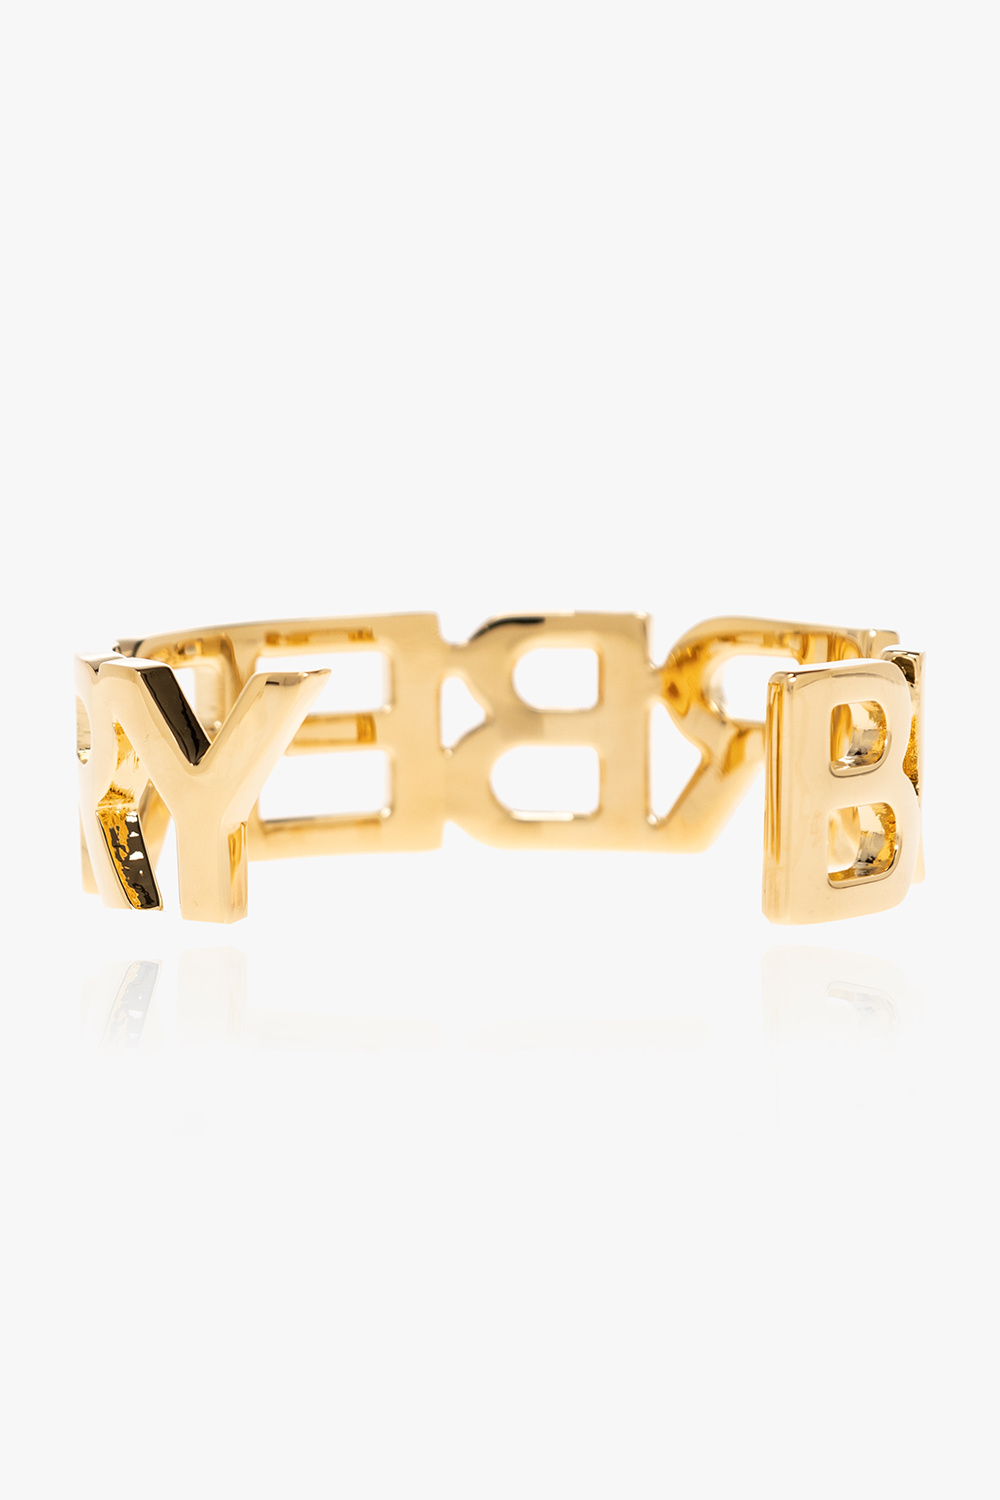 Burberry Brass bracelet